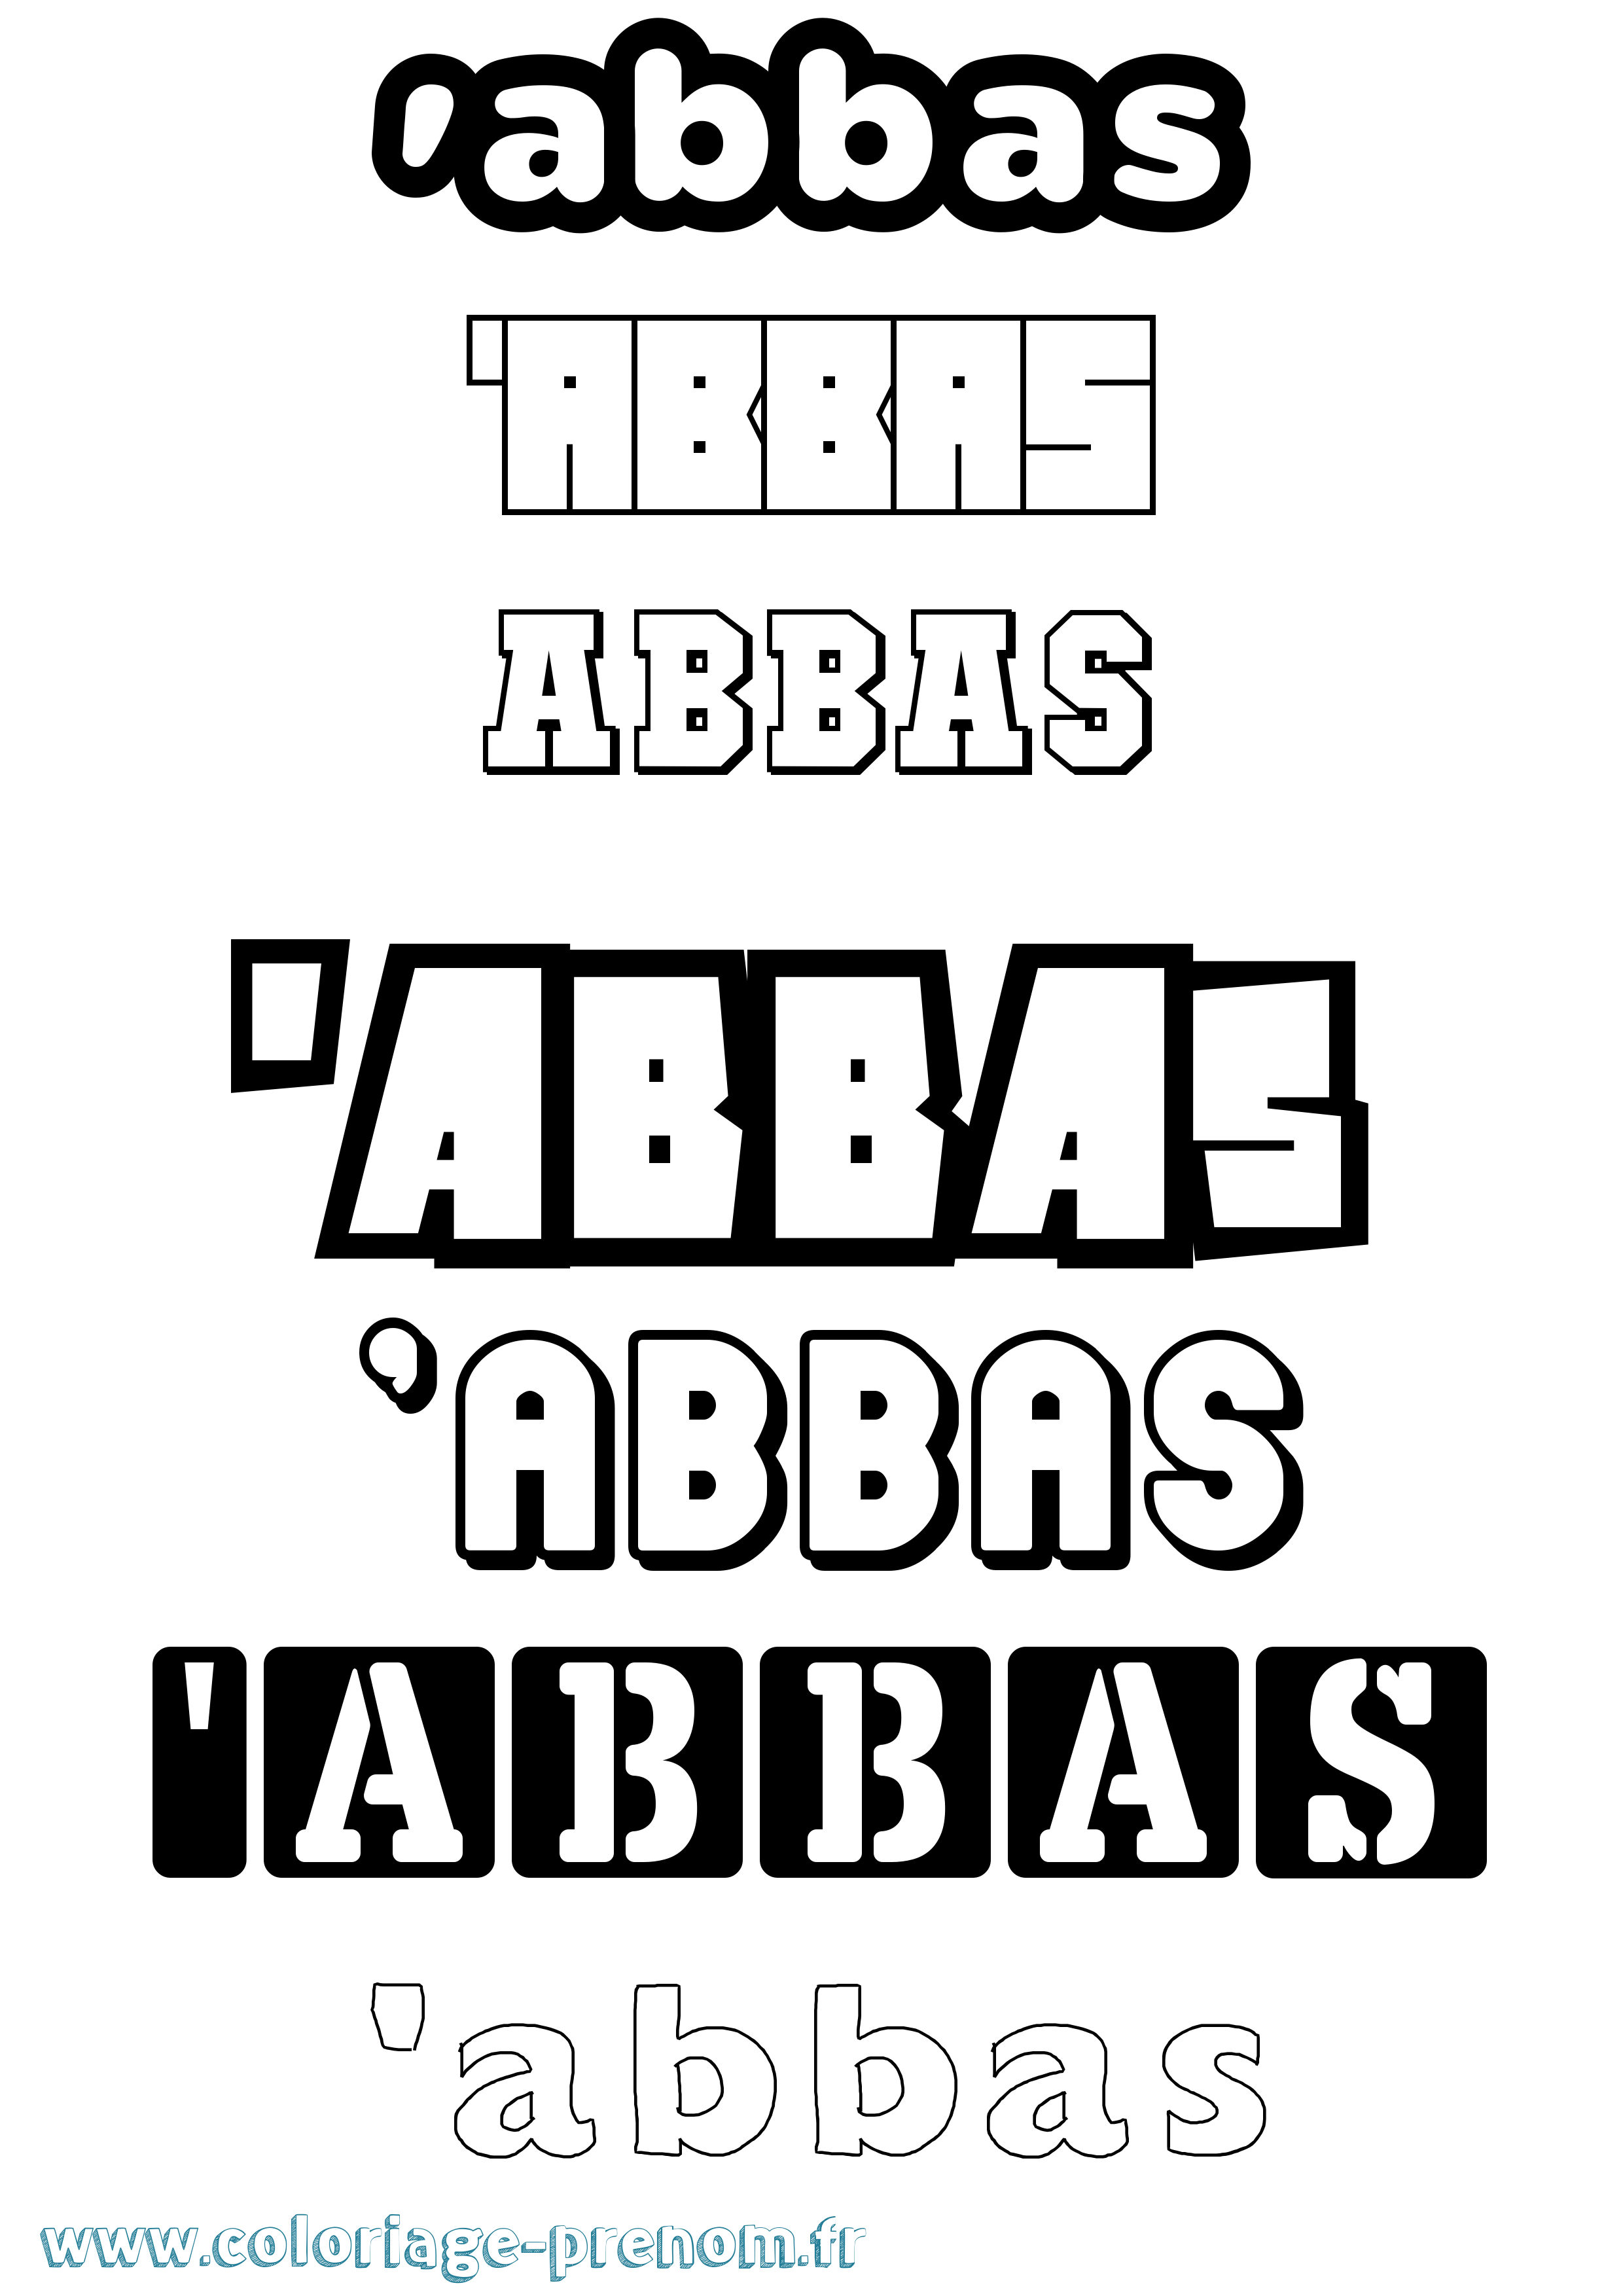 Coloriage prénom 'Abbas Simple